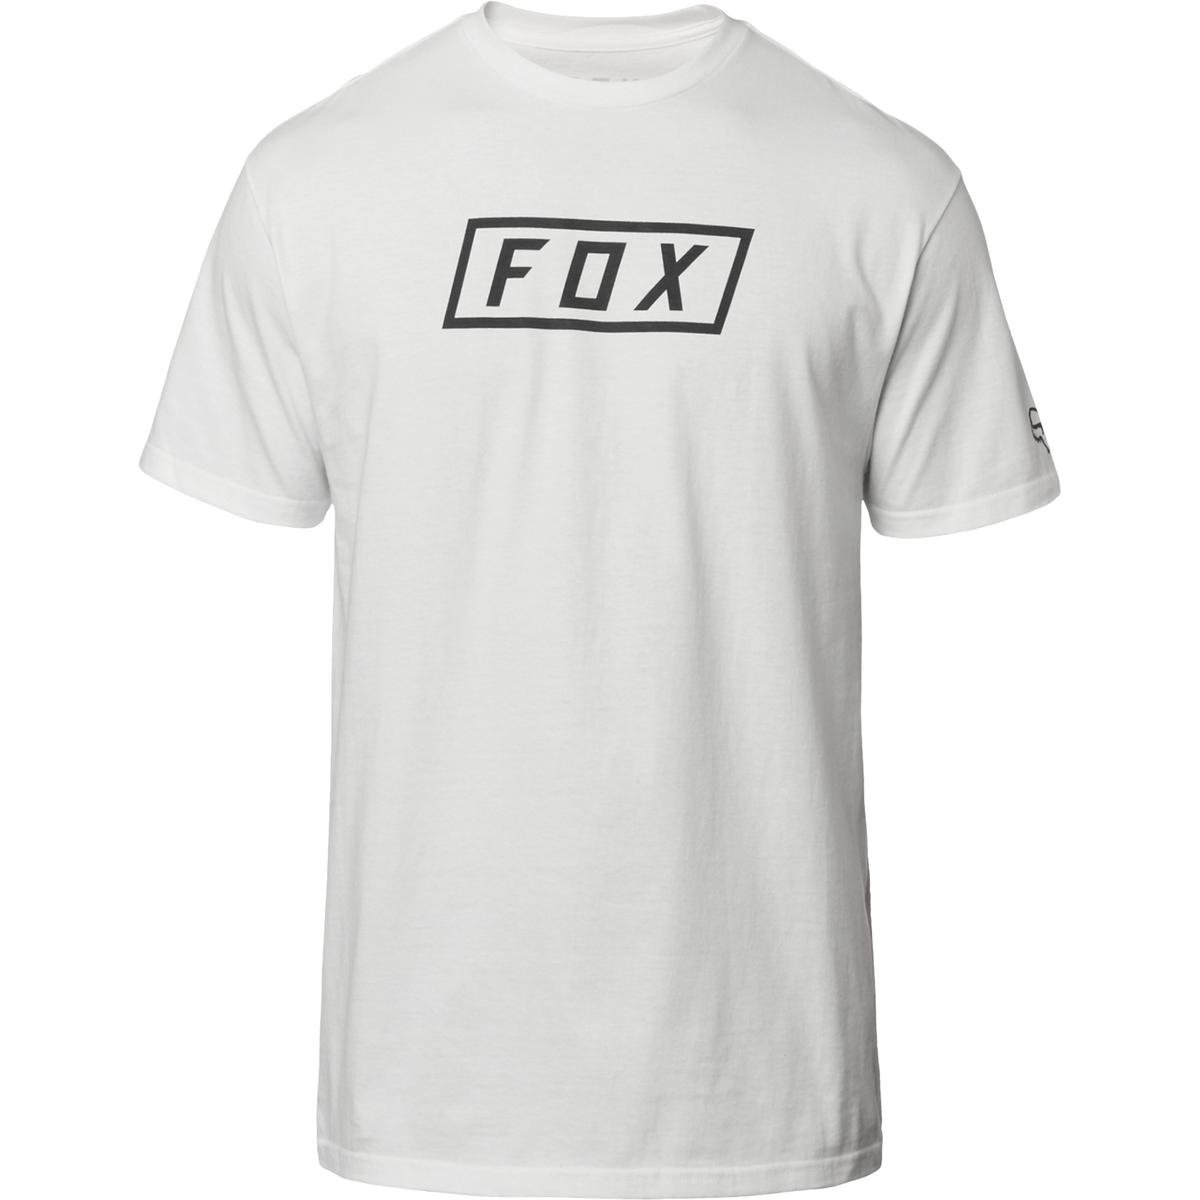 Fox Mens White Cotton Logo Tee T-Shirt 2XL BHFO 9279 | eBay